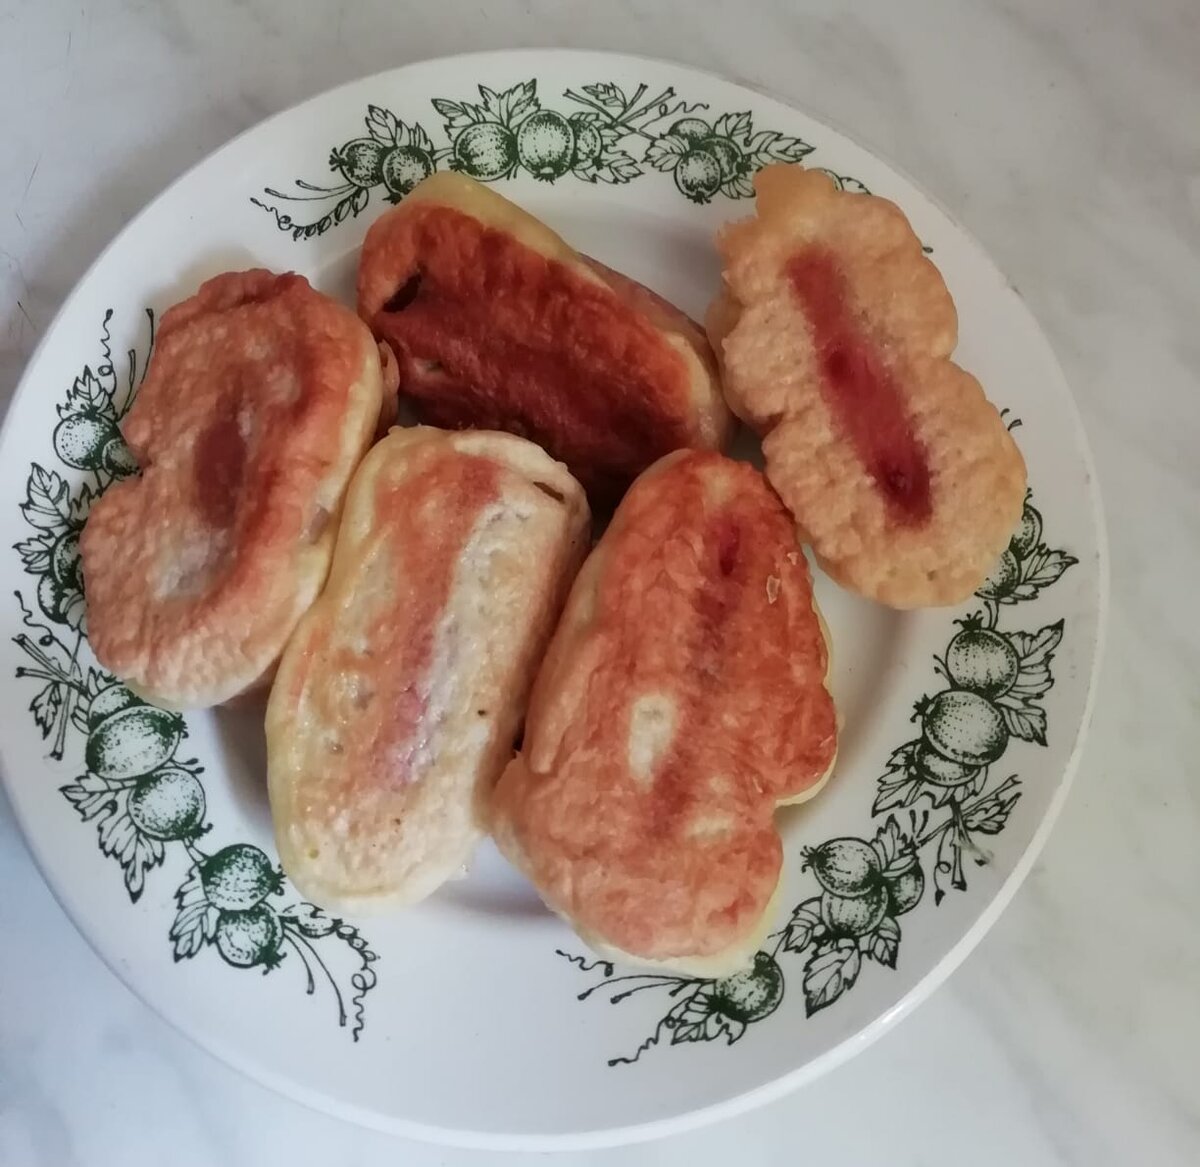 Сосиски в кляре на сковороде простой рецепт с фото